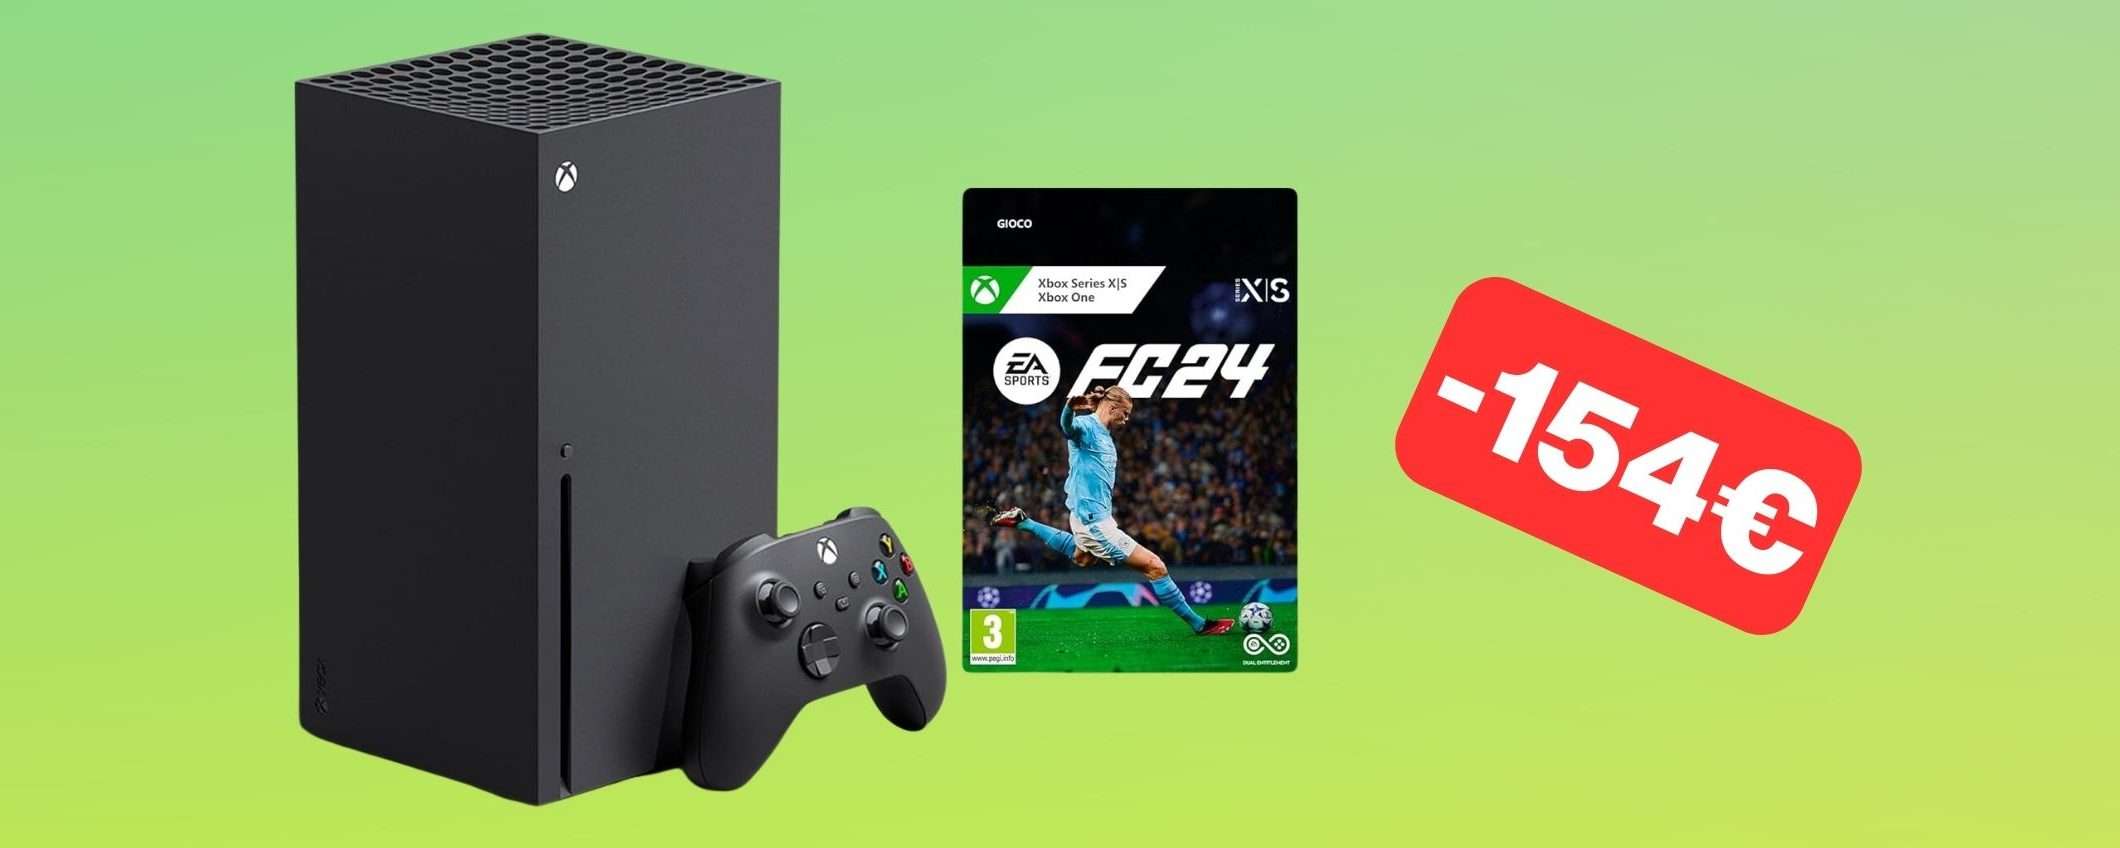 BOMBA Amazon: Xbox Series X con FC 24 al minimo storico (-154€)